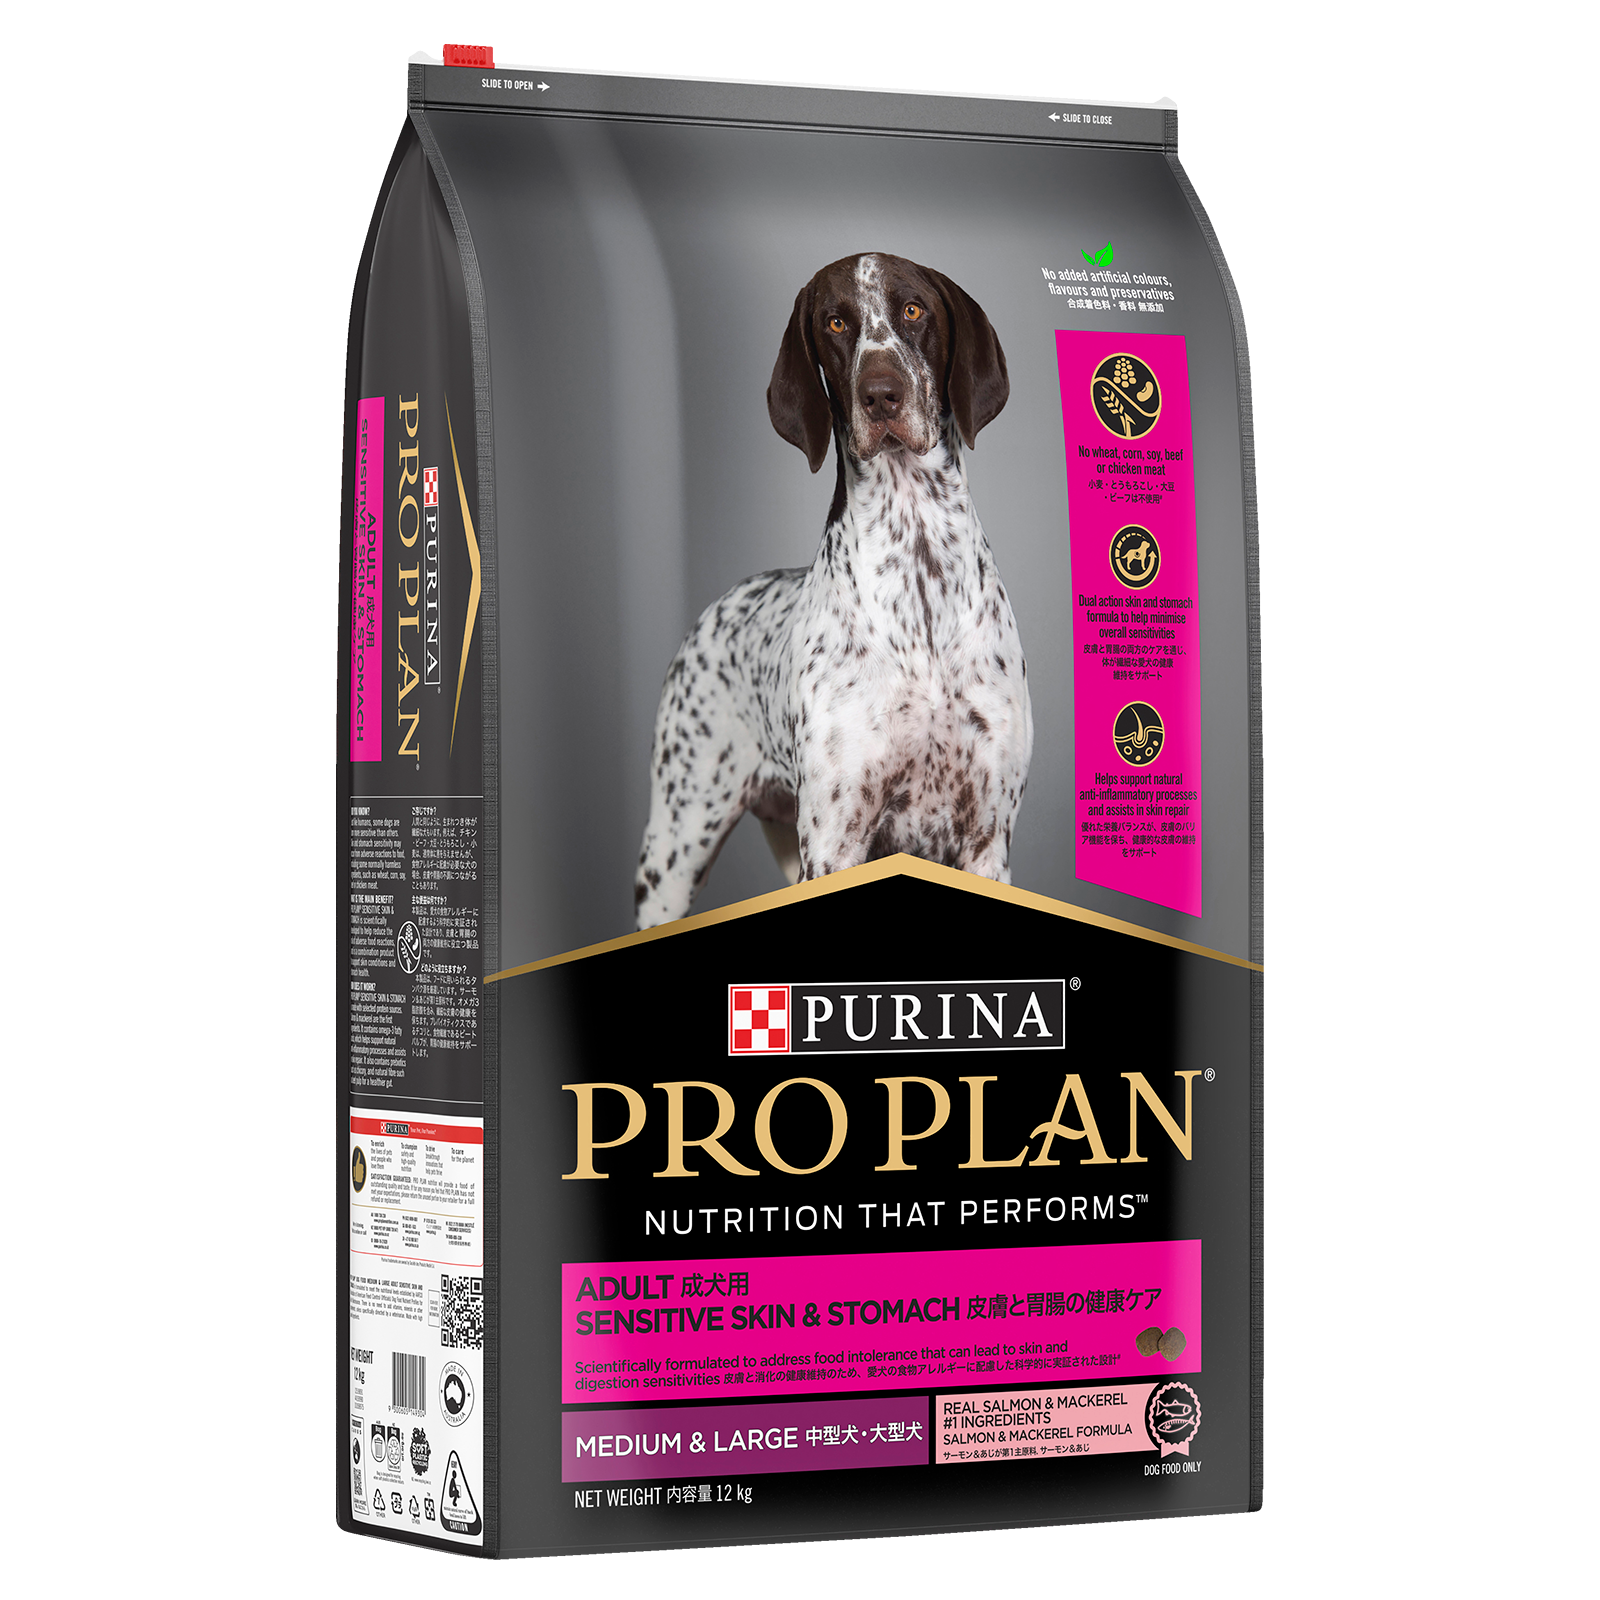 Pro Plan Dog Food Sensitive Skin & Stomach Medium & Large Breed